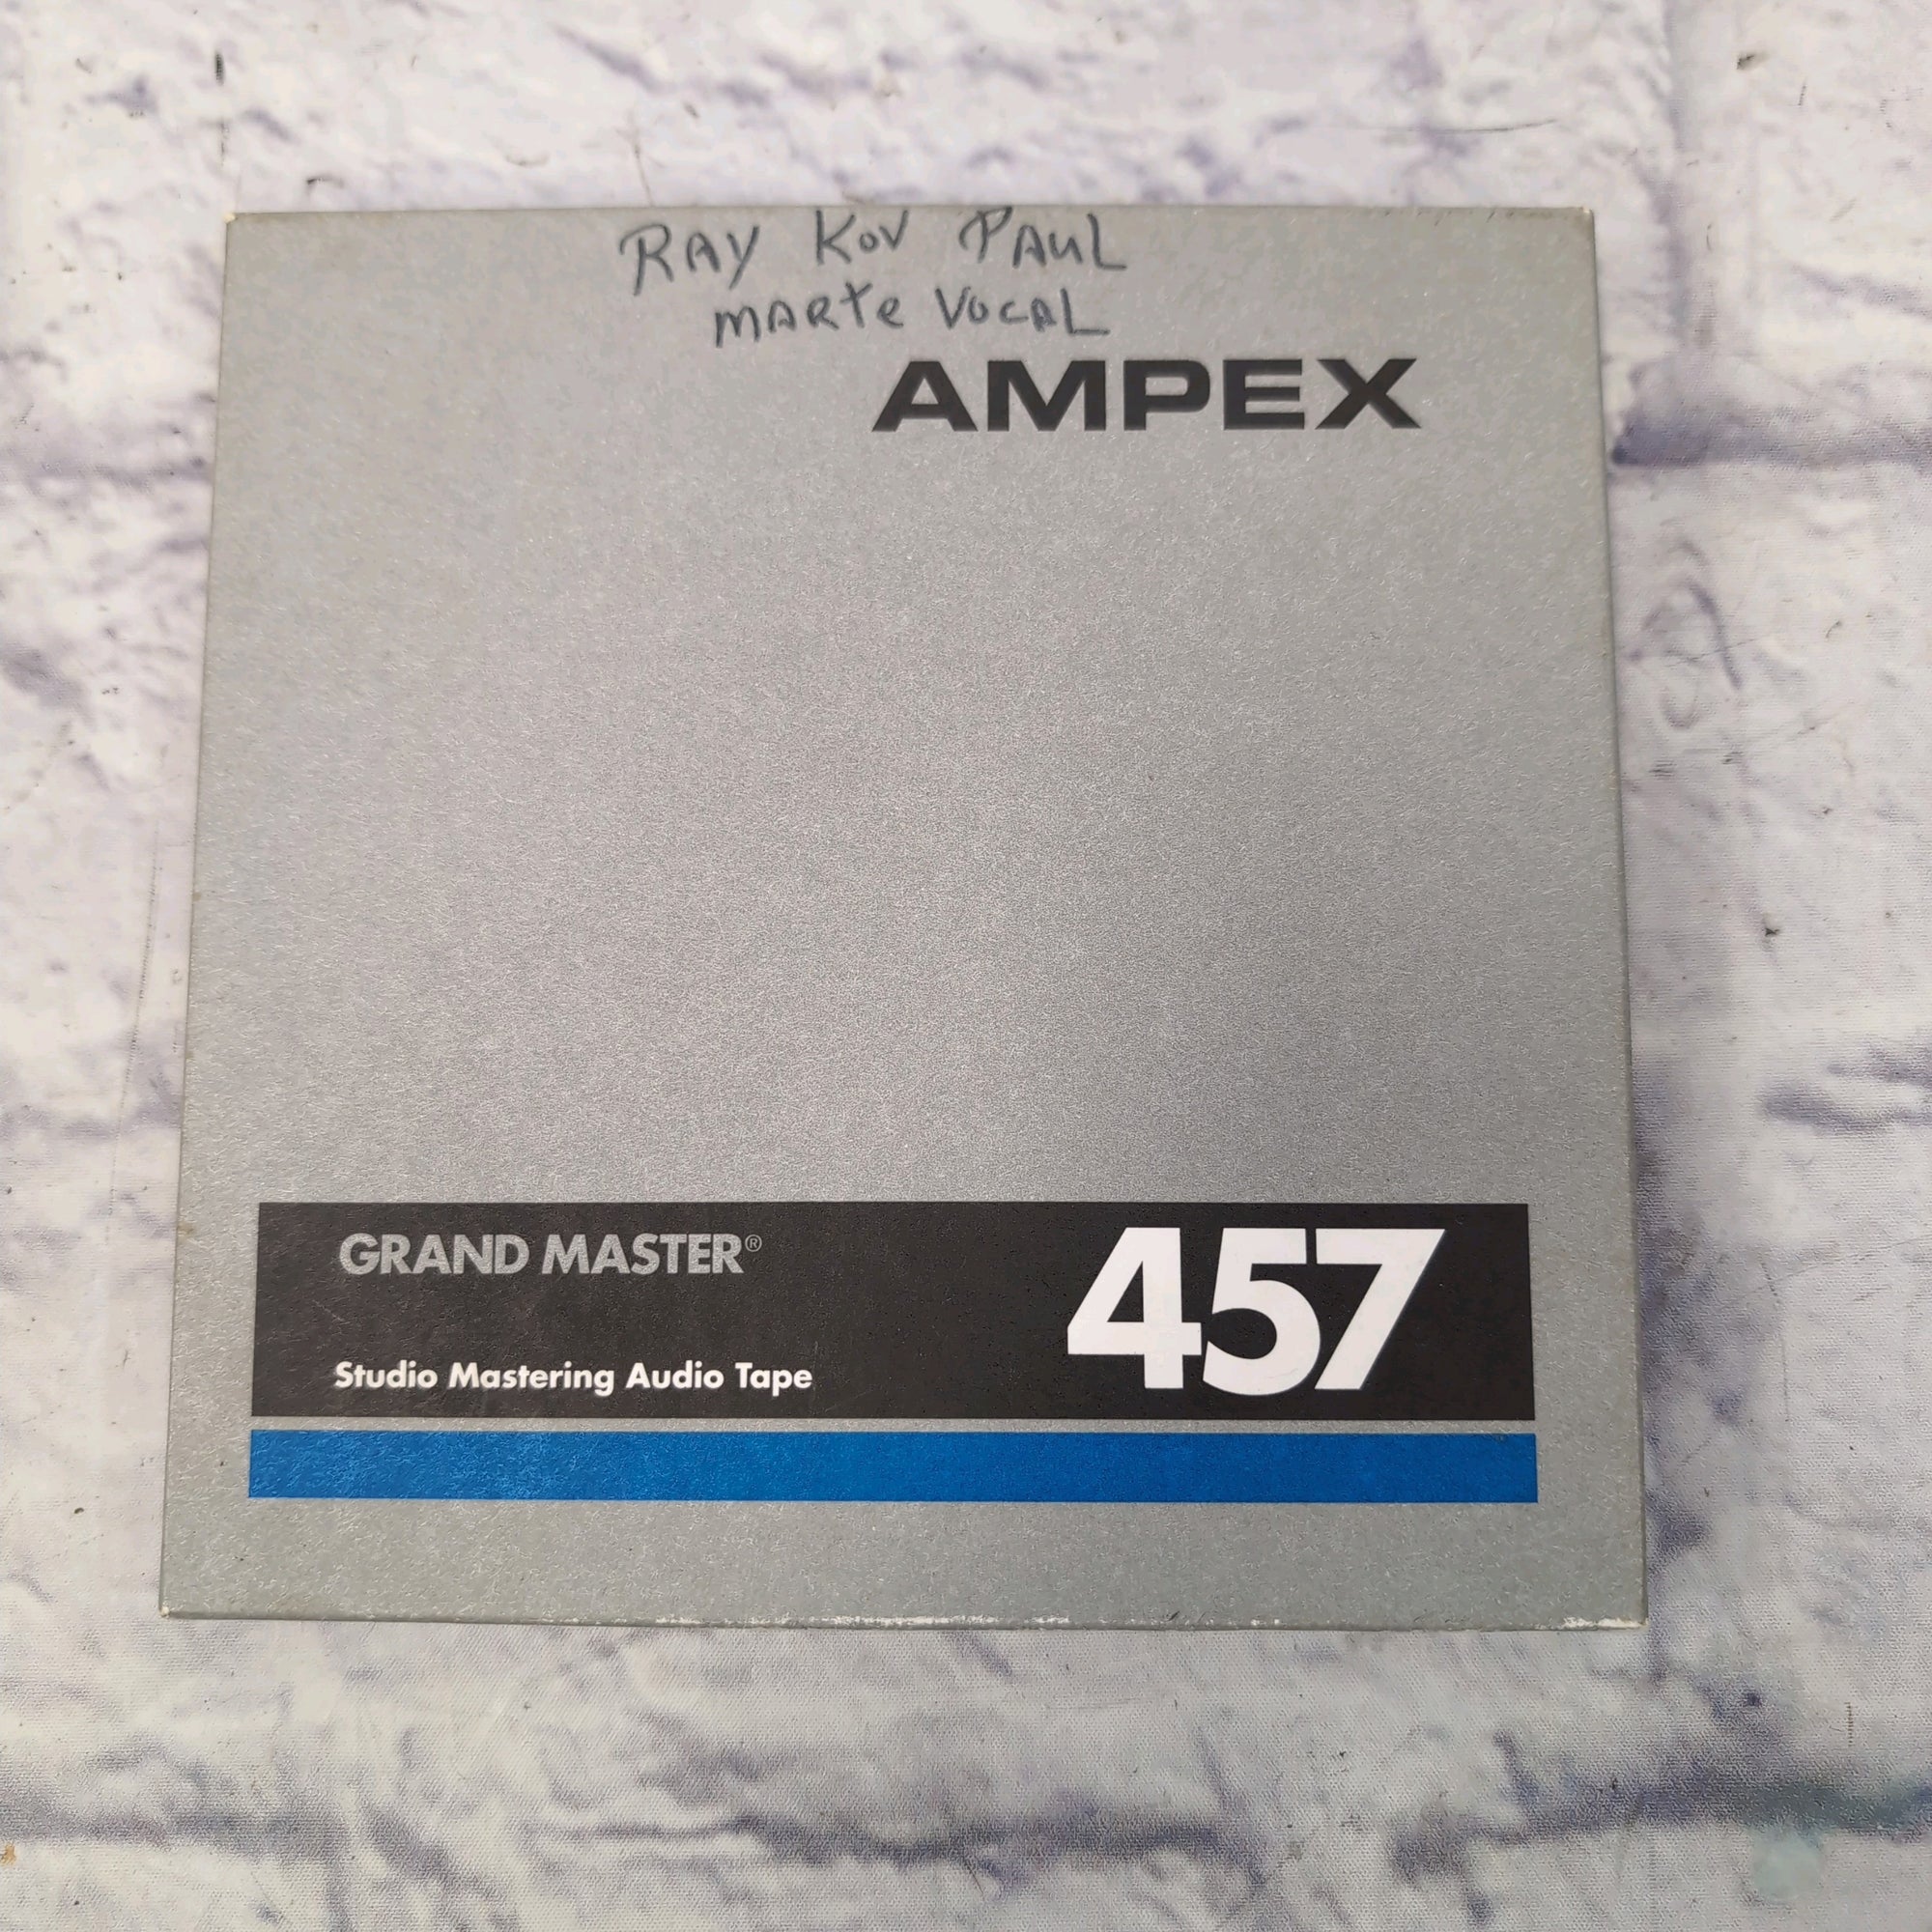 Ampex 457 Grand Master 1/4 x 1800' 7 Reel to Reel Mastering Audio Tape